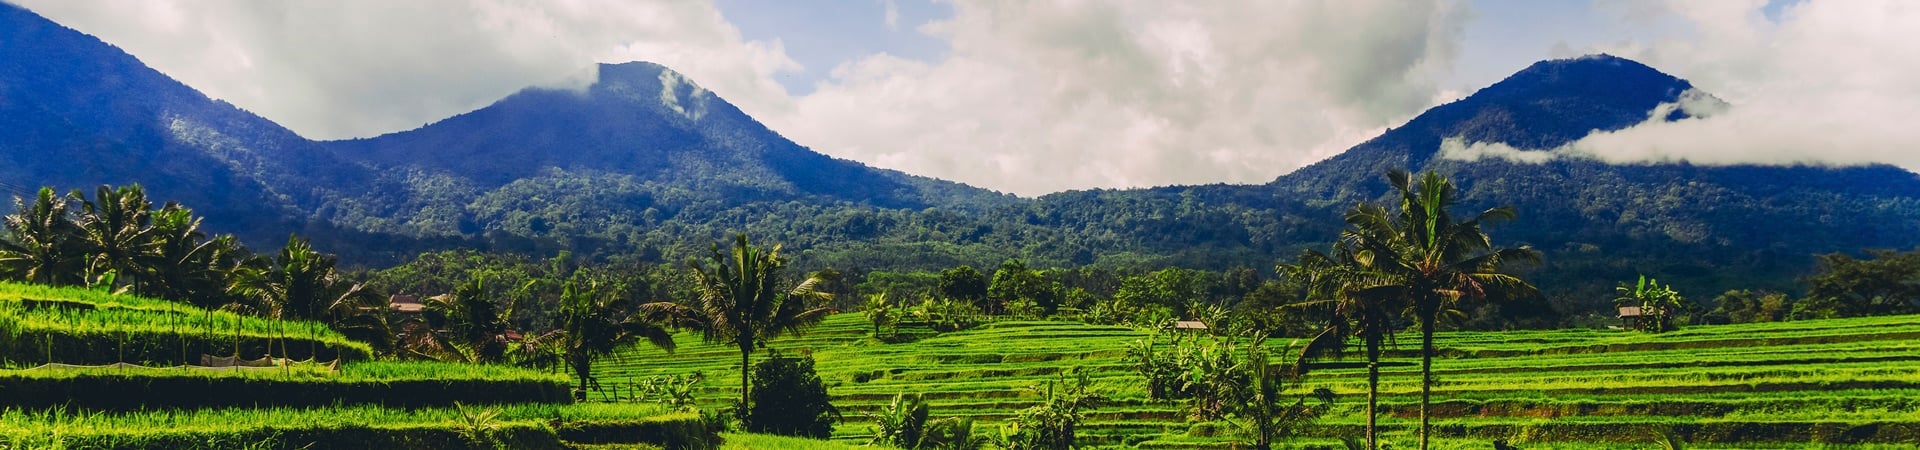 Bali & Lombok On The Green